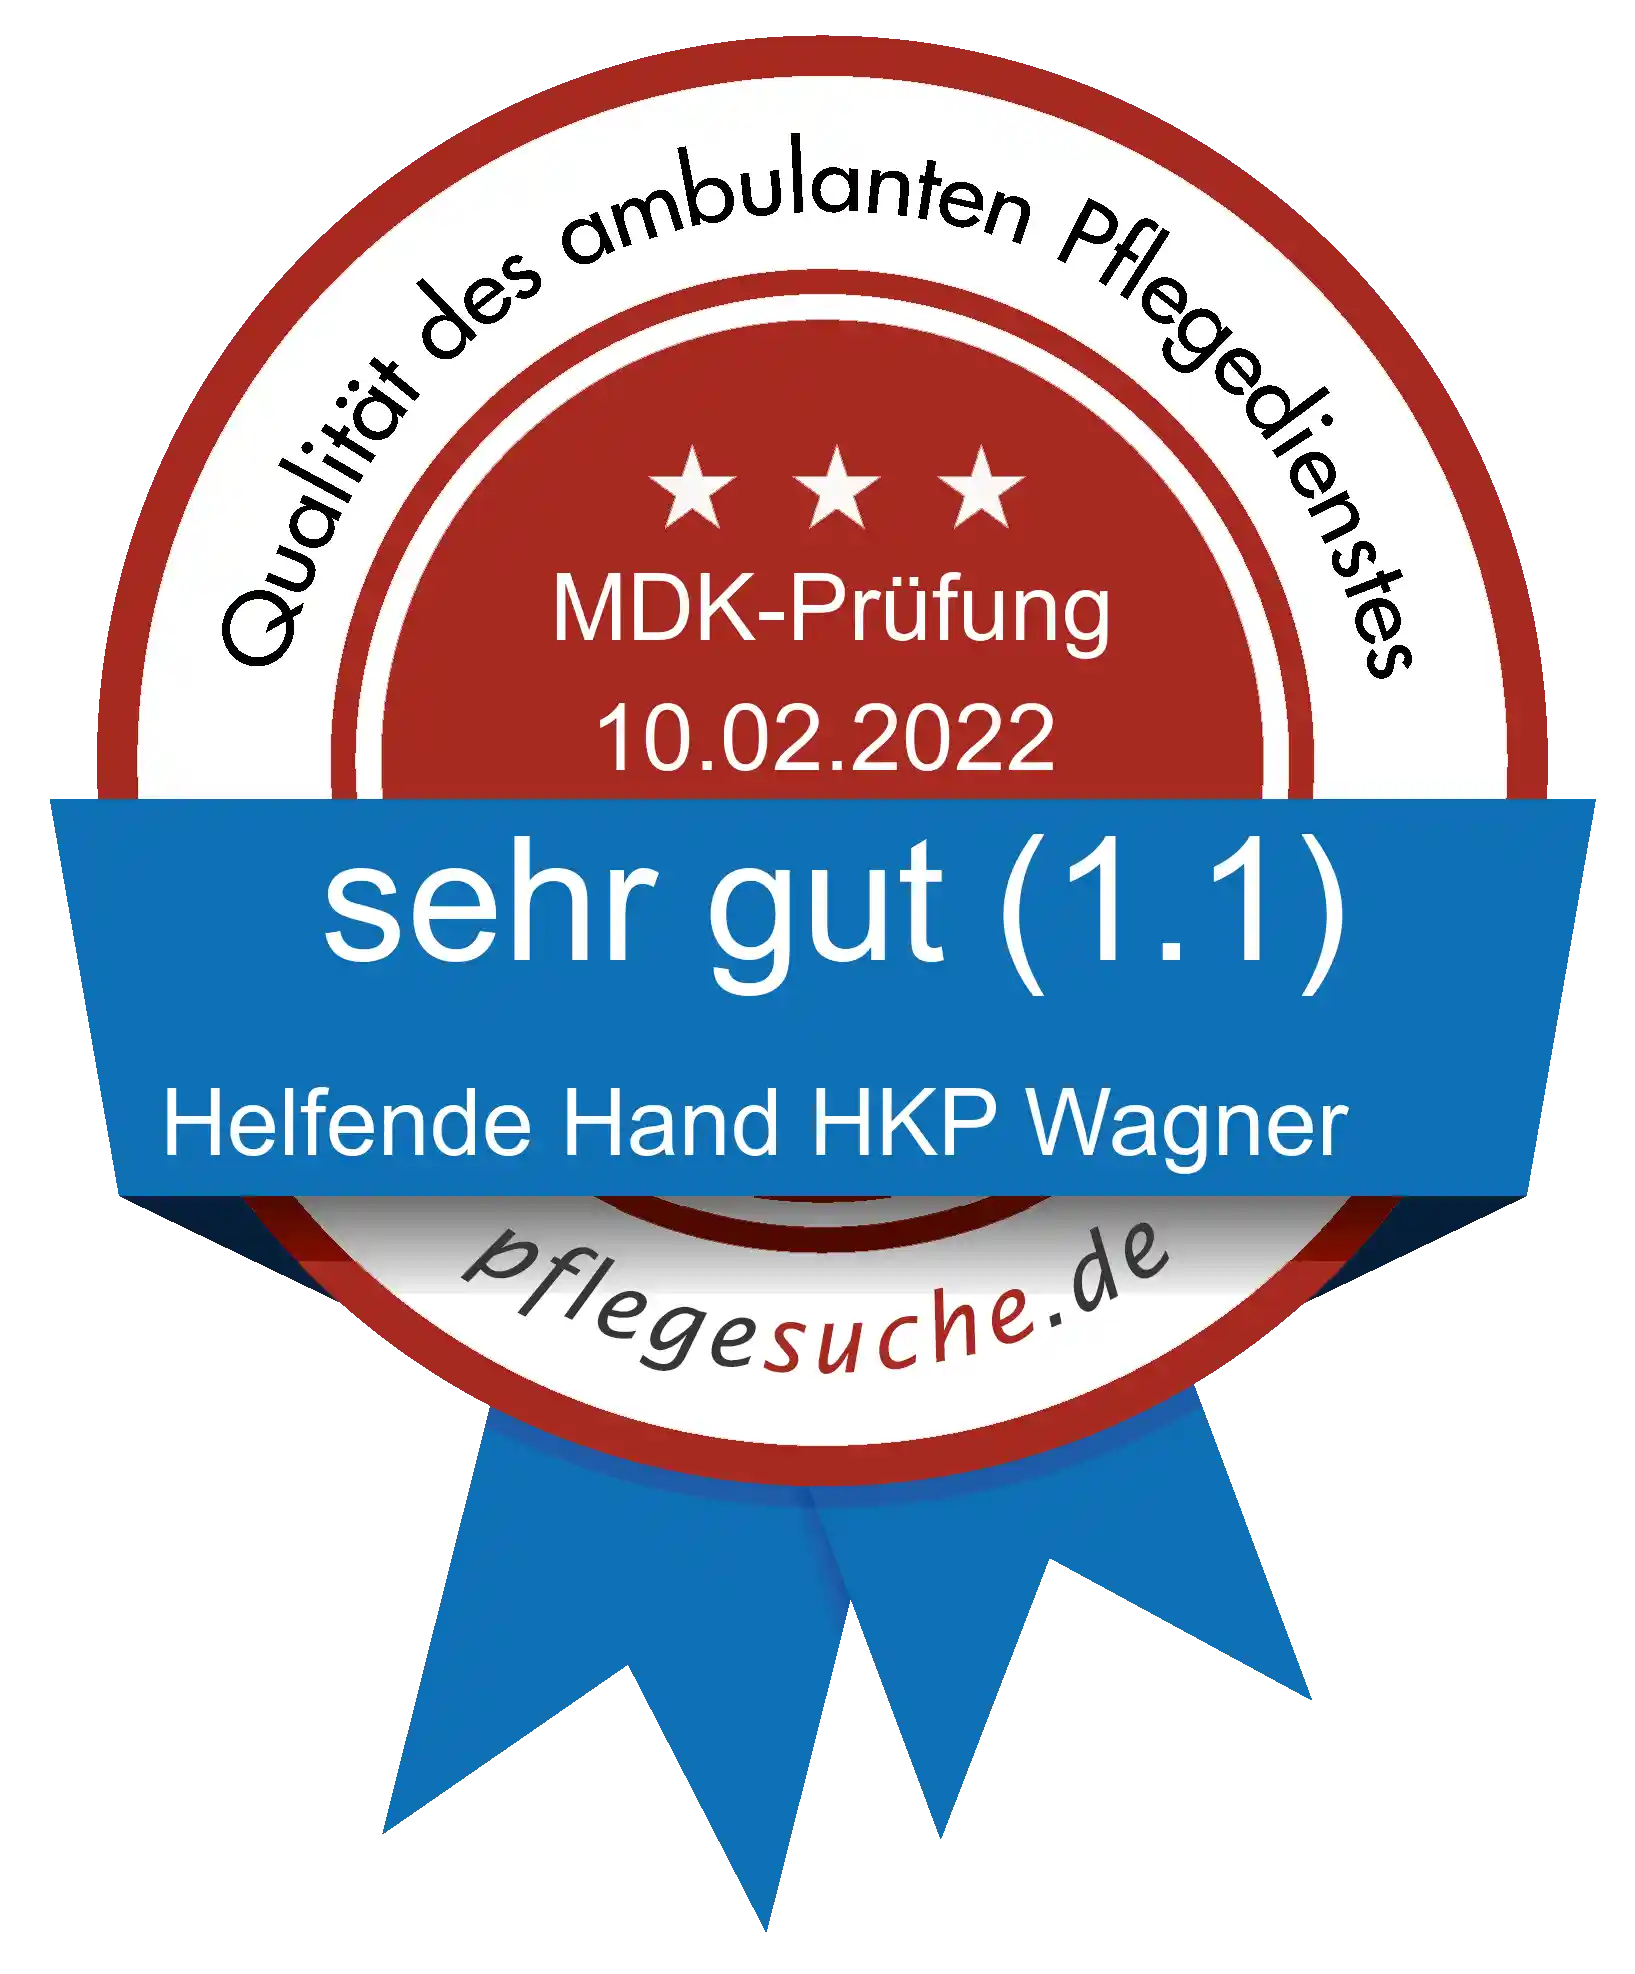 Siegel Benotung: Helfende Hand HKP Wagner